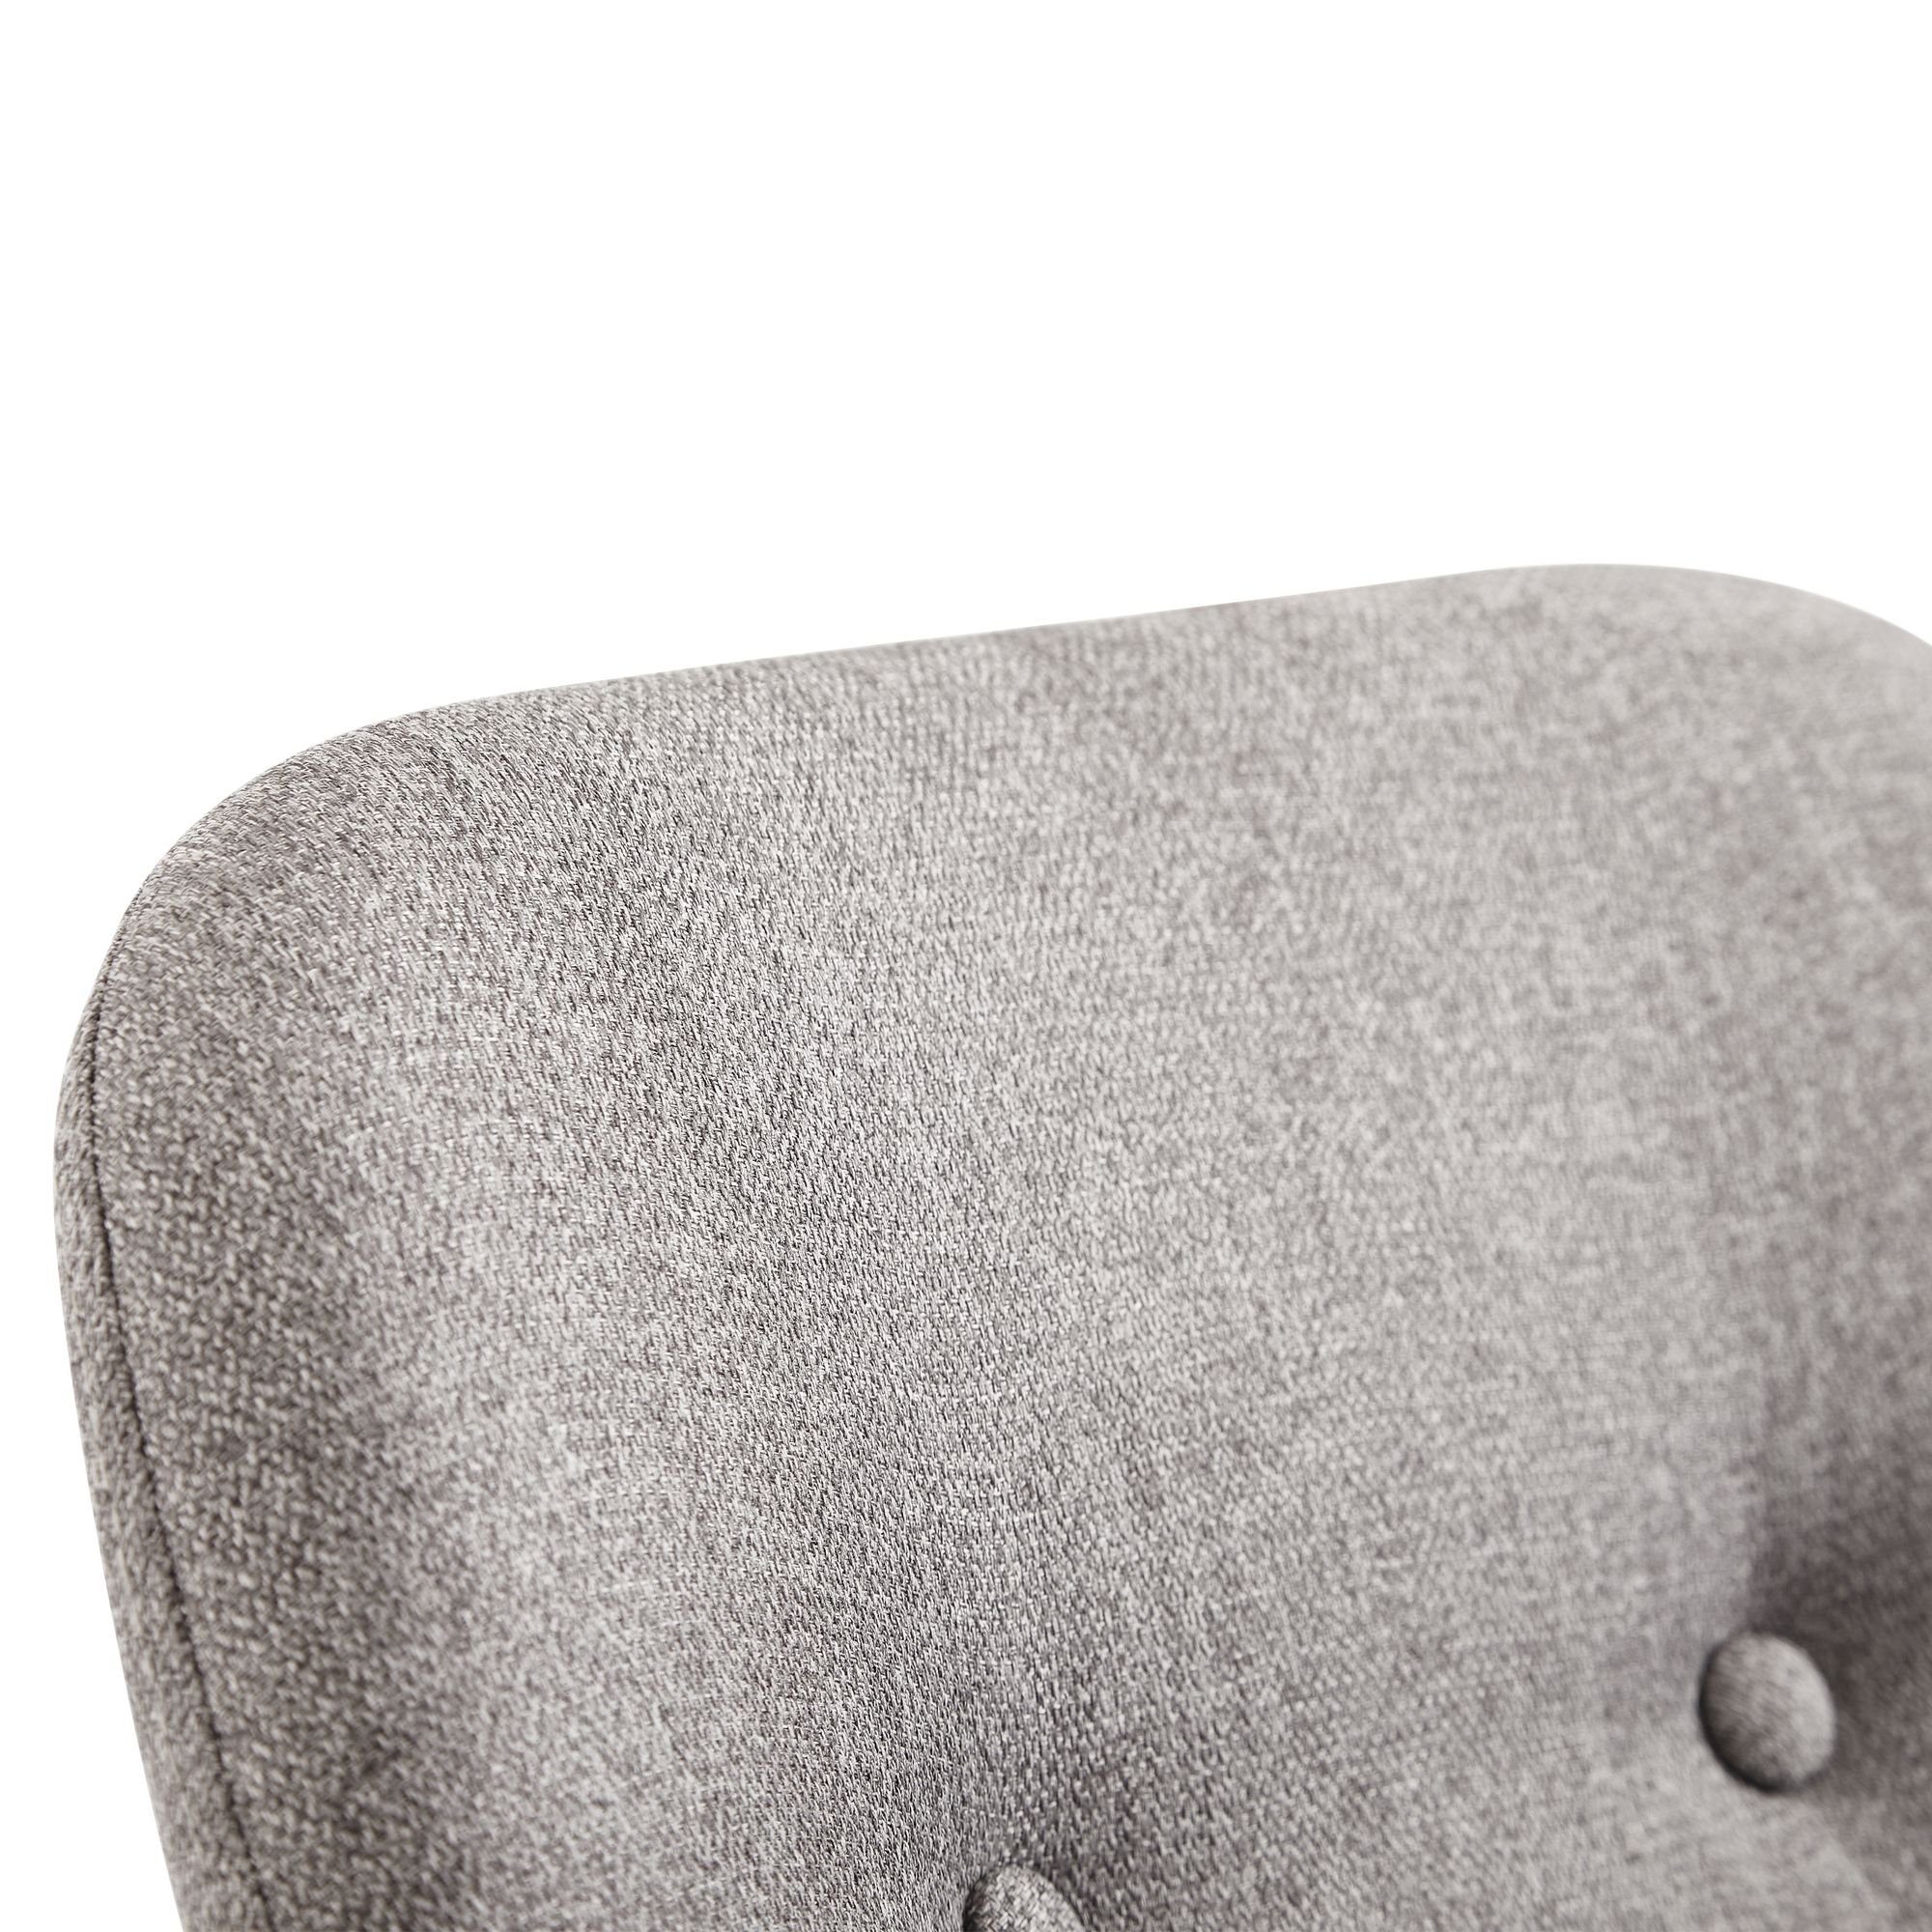 | Grau kompakte DESIGN Grau Design, Gemütlicher Größe Stuhl: Skandinavisches Schaukelstuhl KADIMA